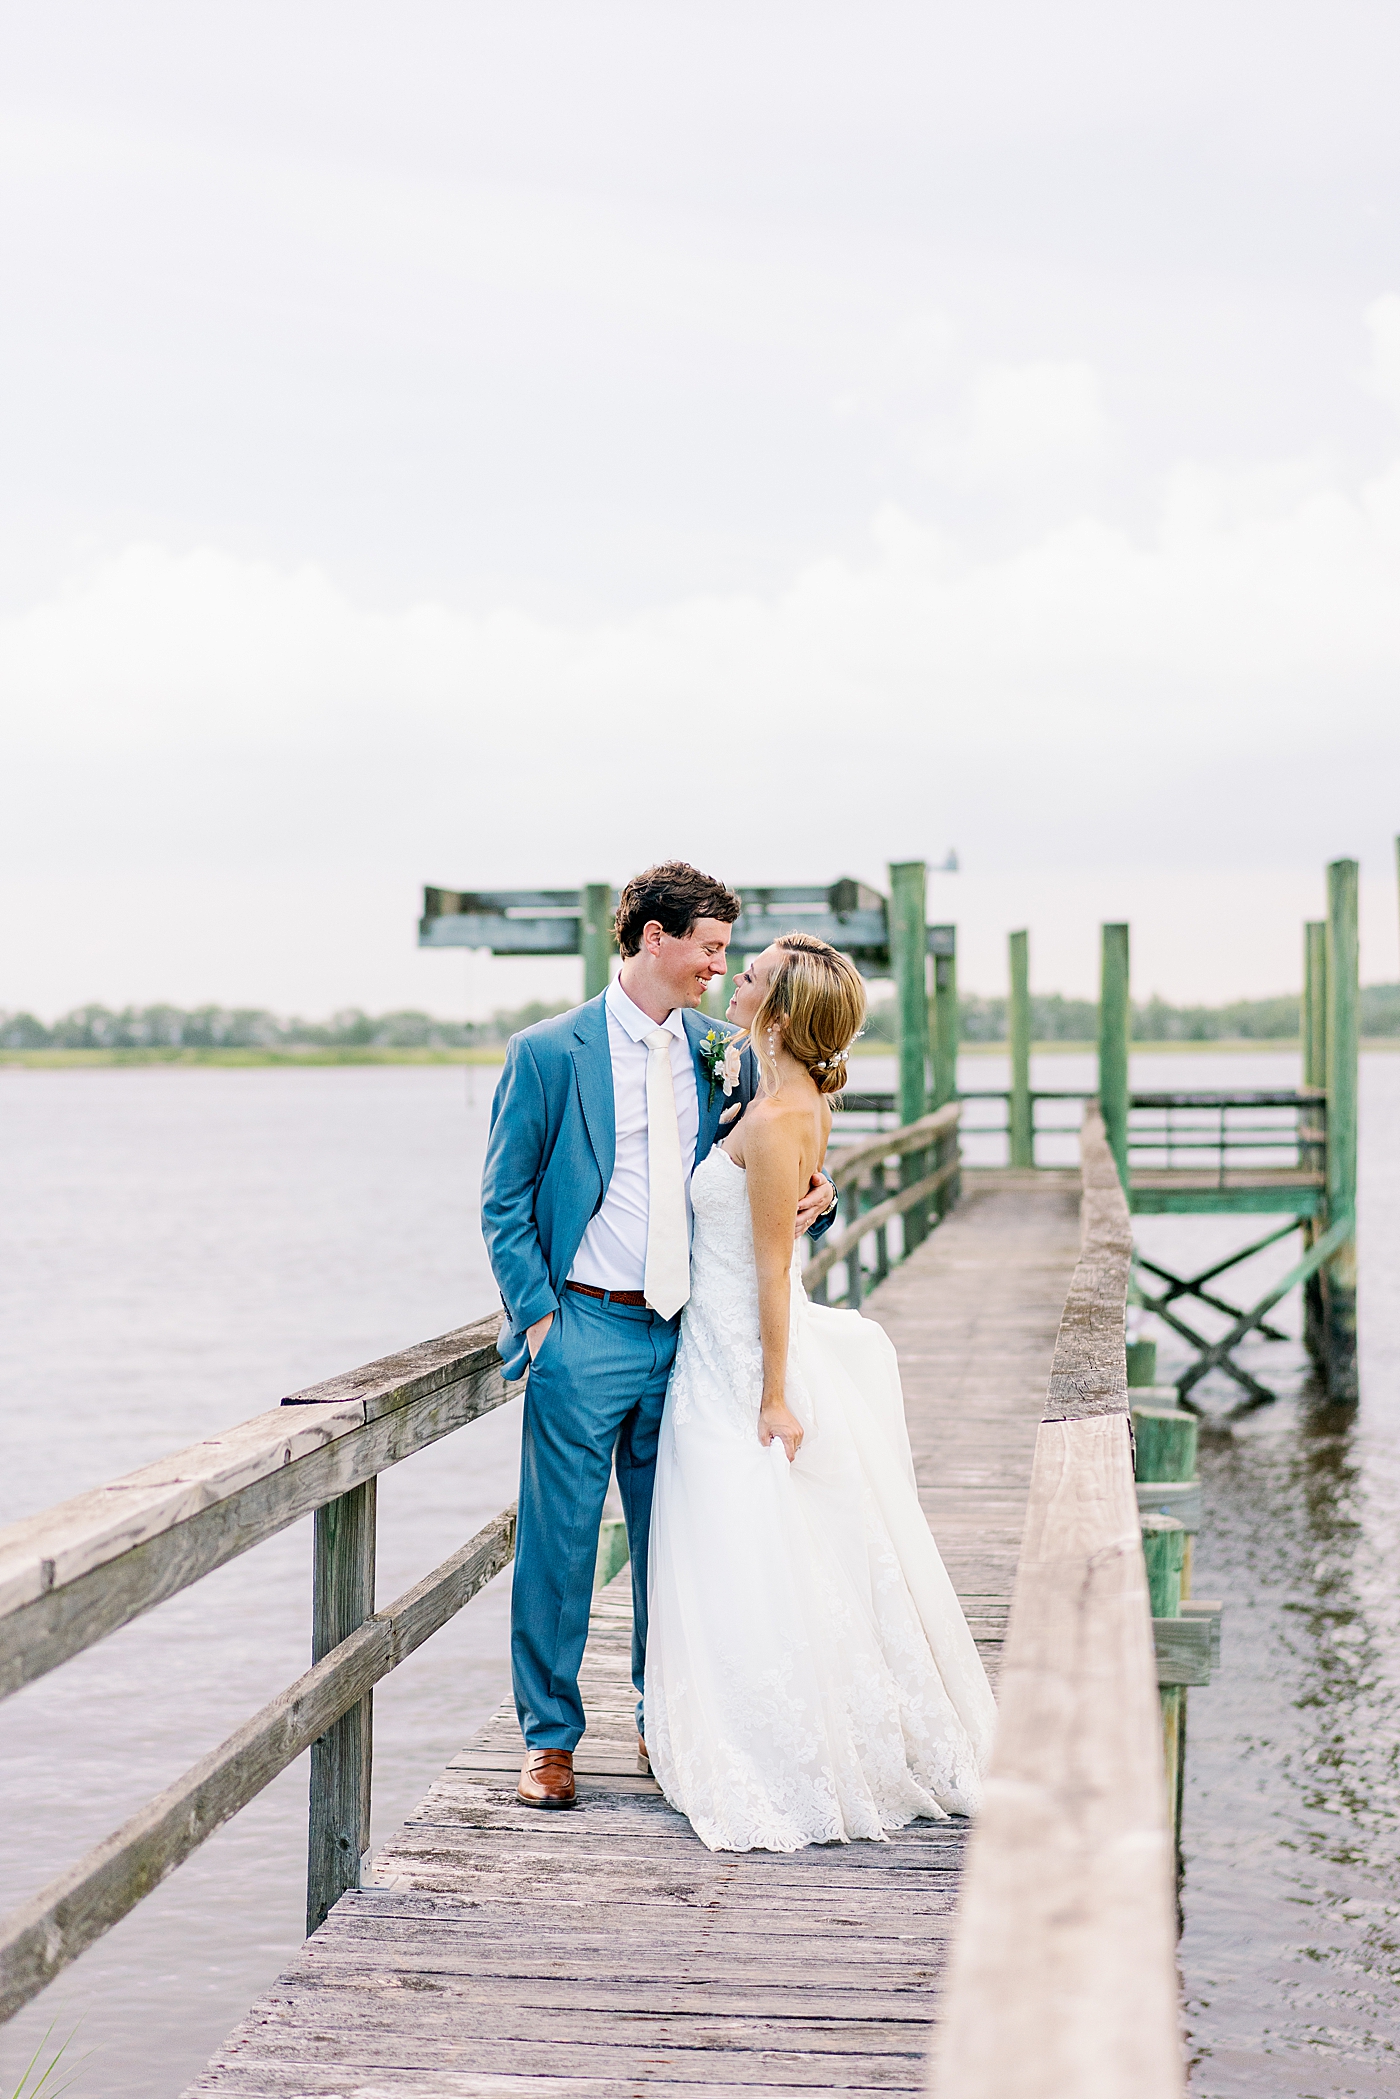 during their Coastal Island House Wedding | Image by Annie Laura Photo